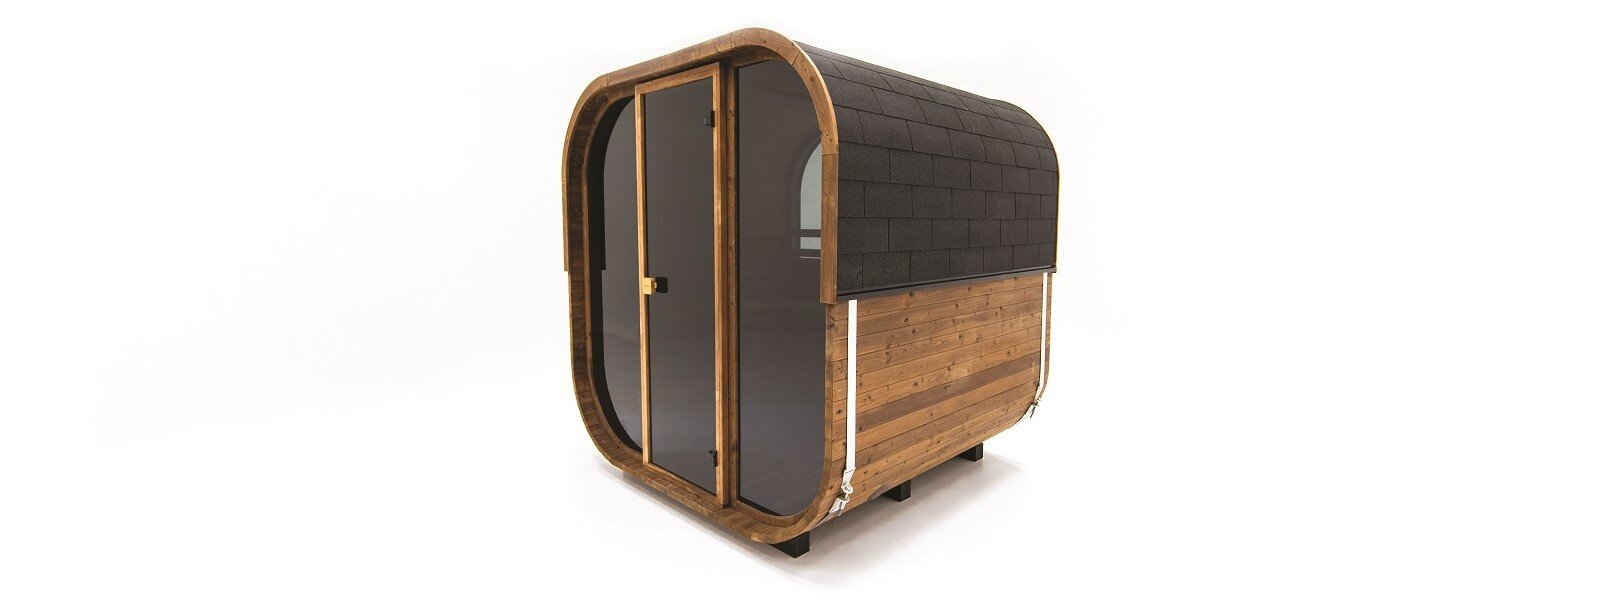 Cube sauna Hekla